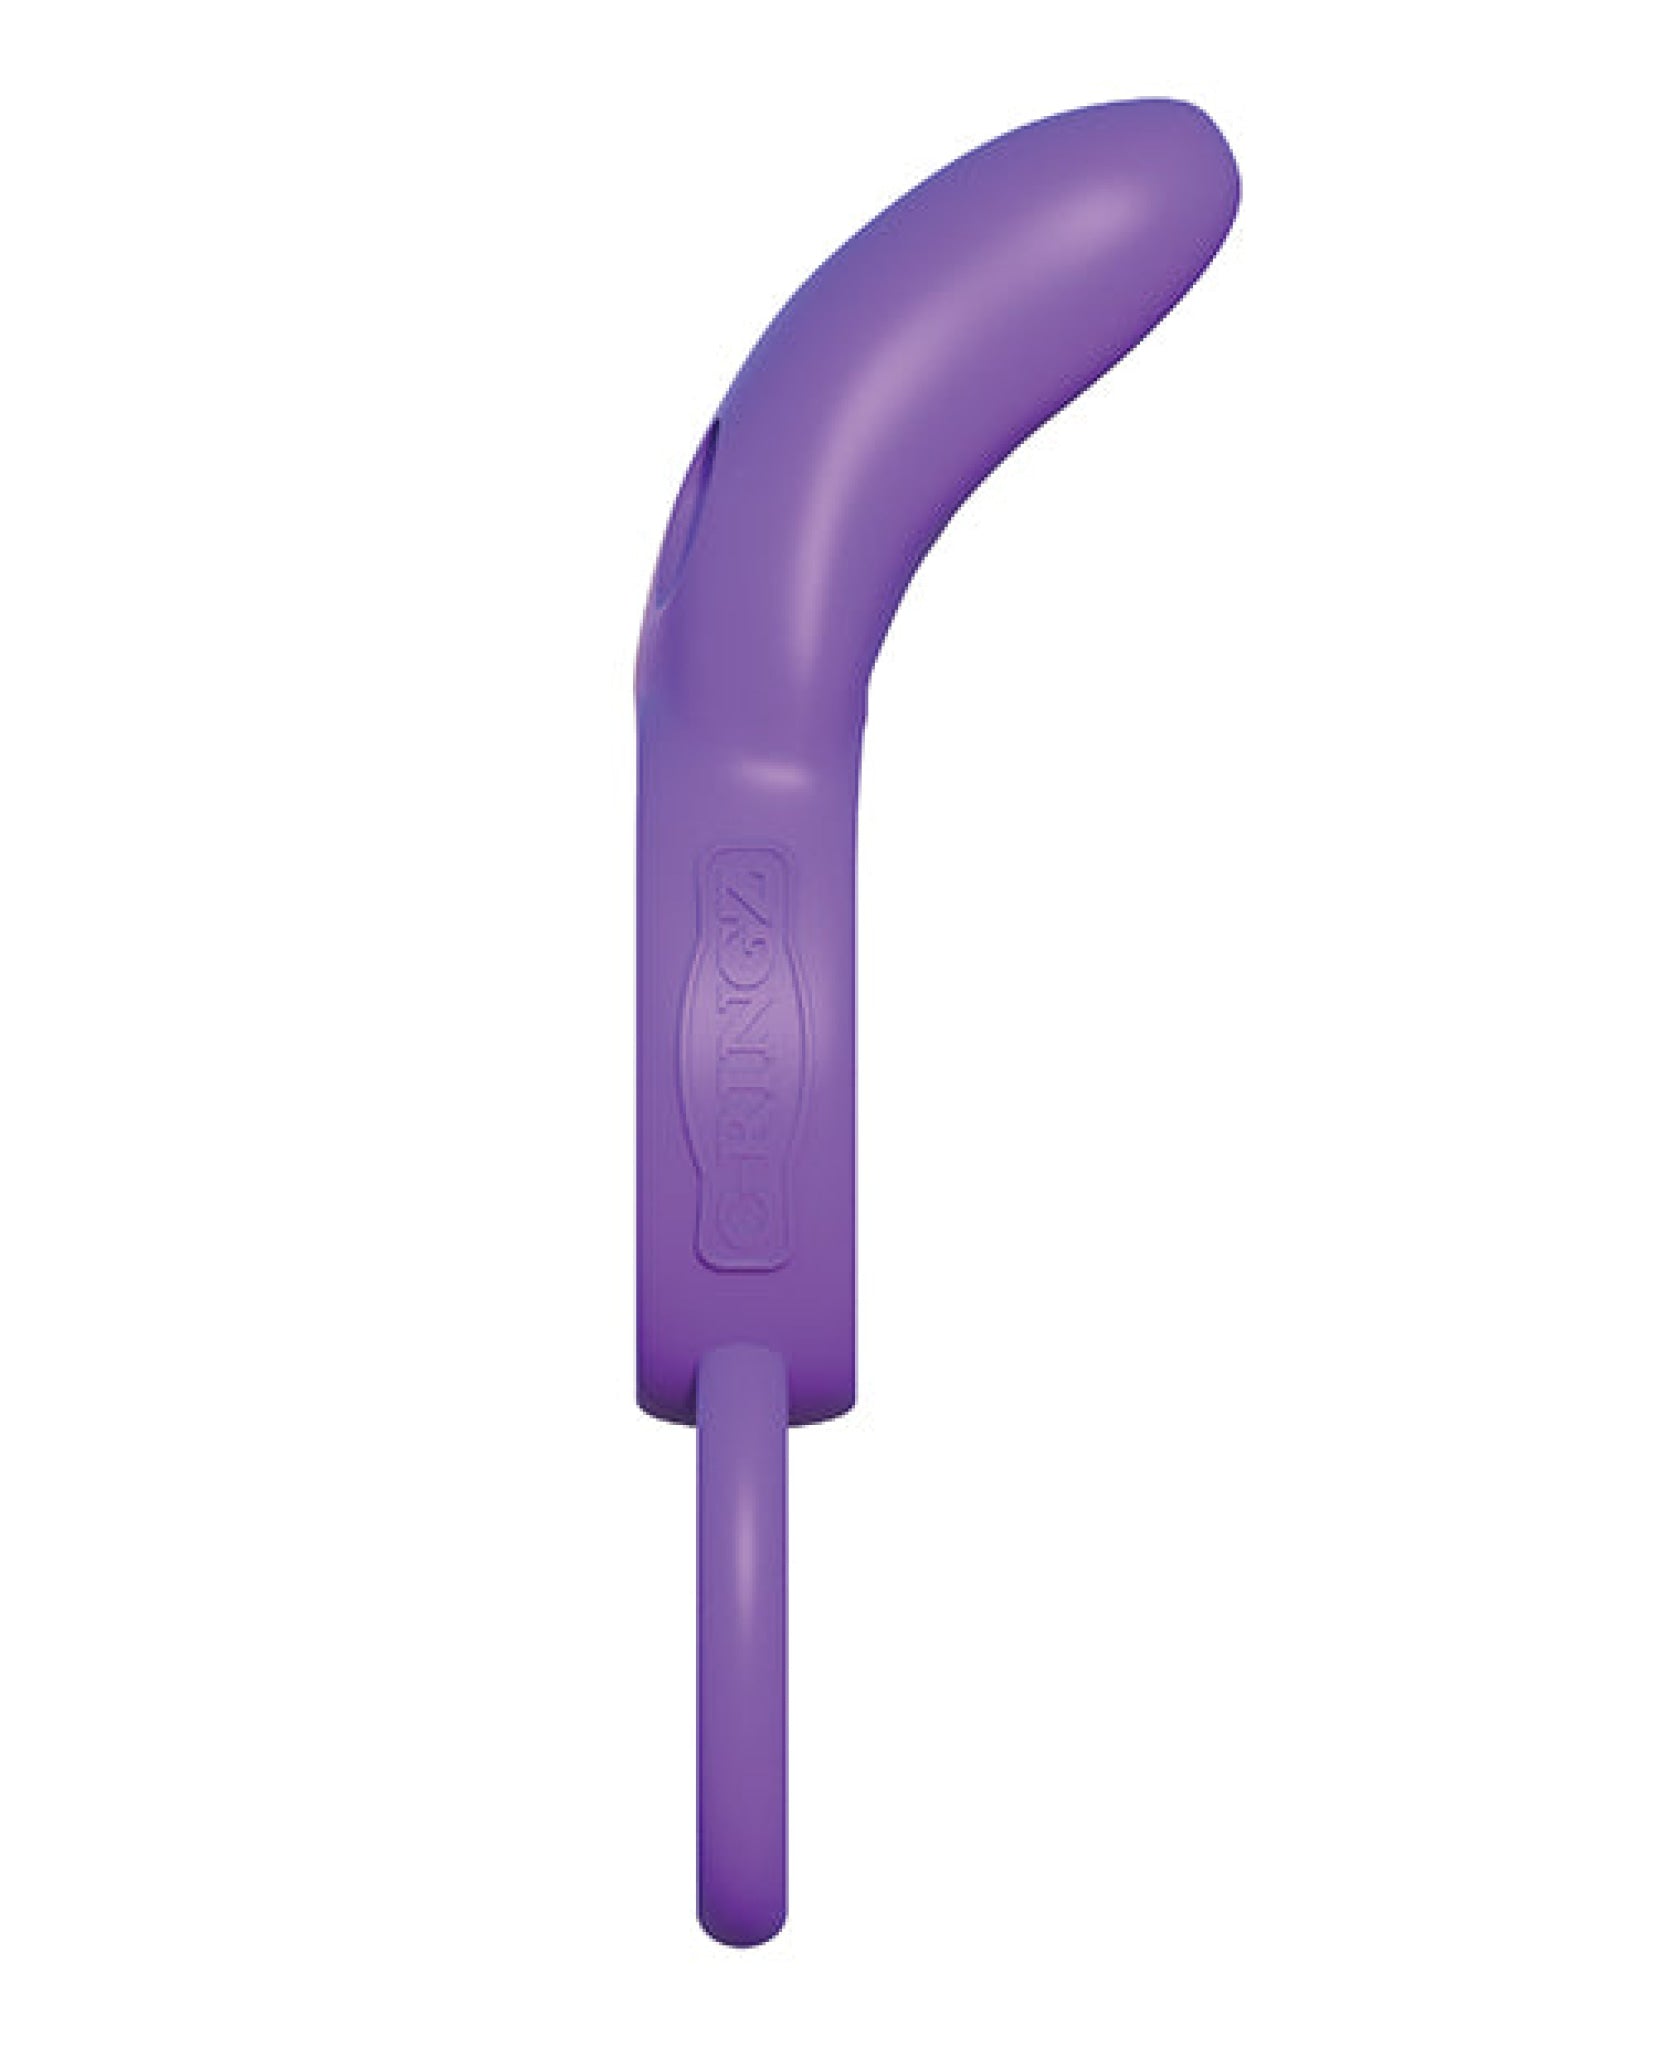 Fantasy C-ringz Twin Teazer Rabbit Ring - Purple Pipedream®